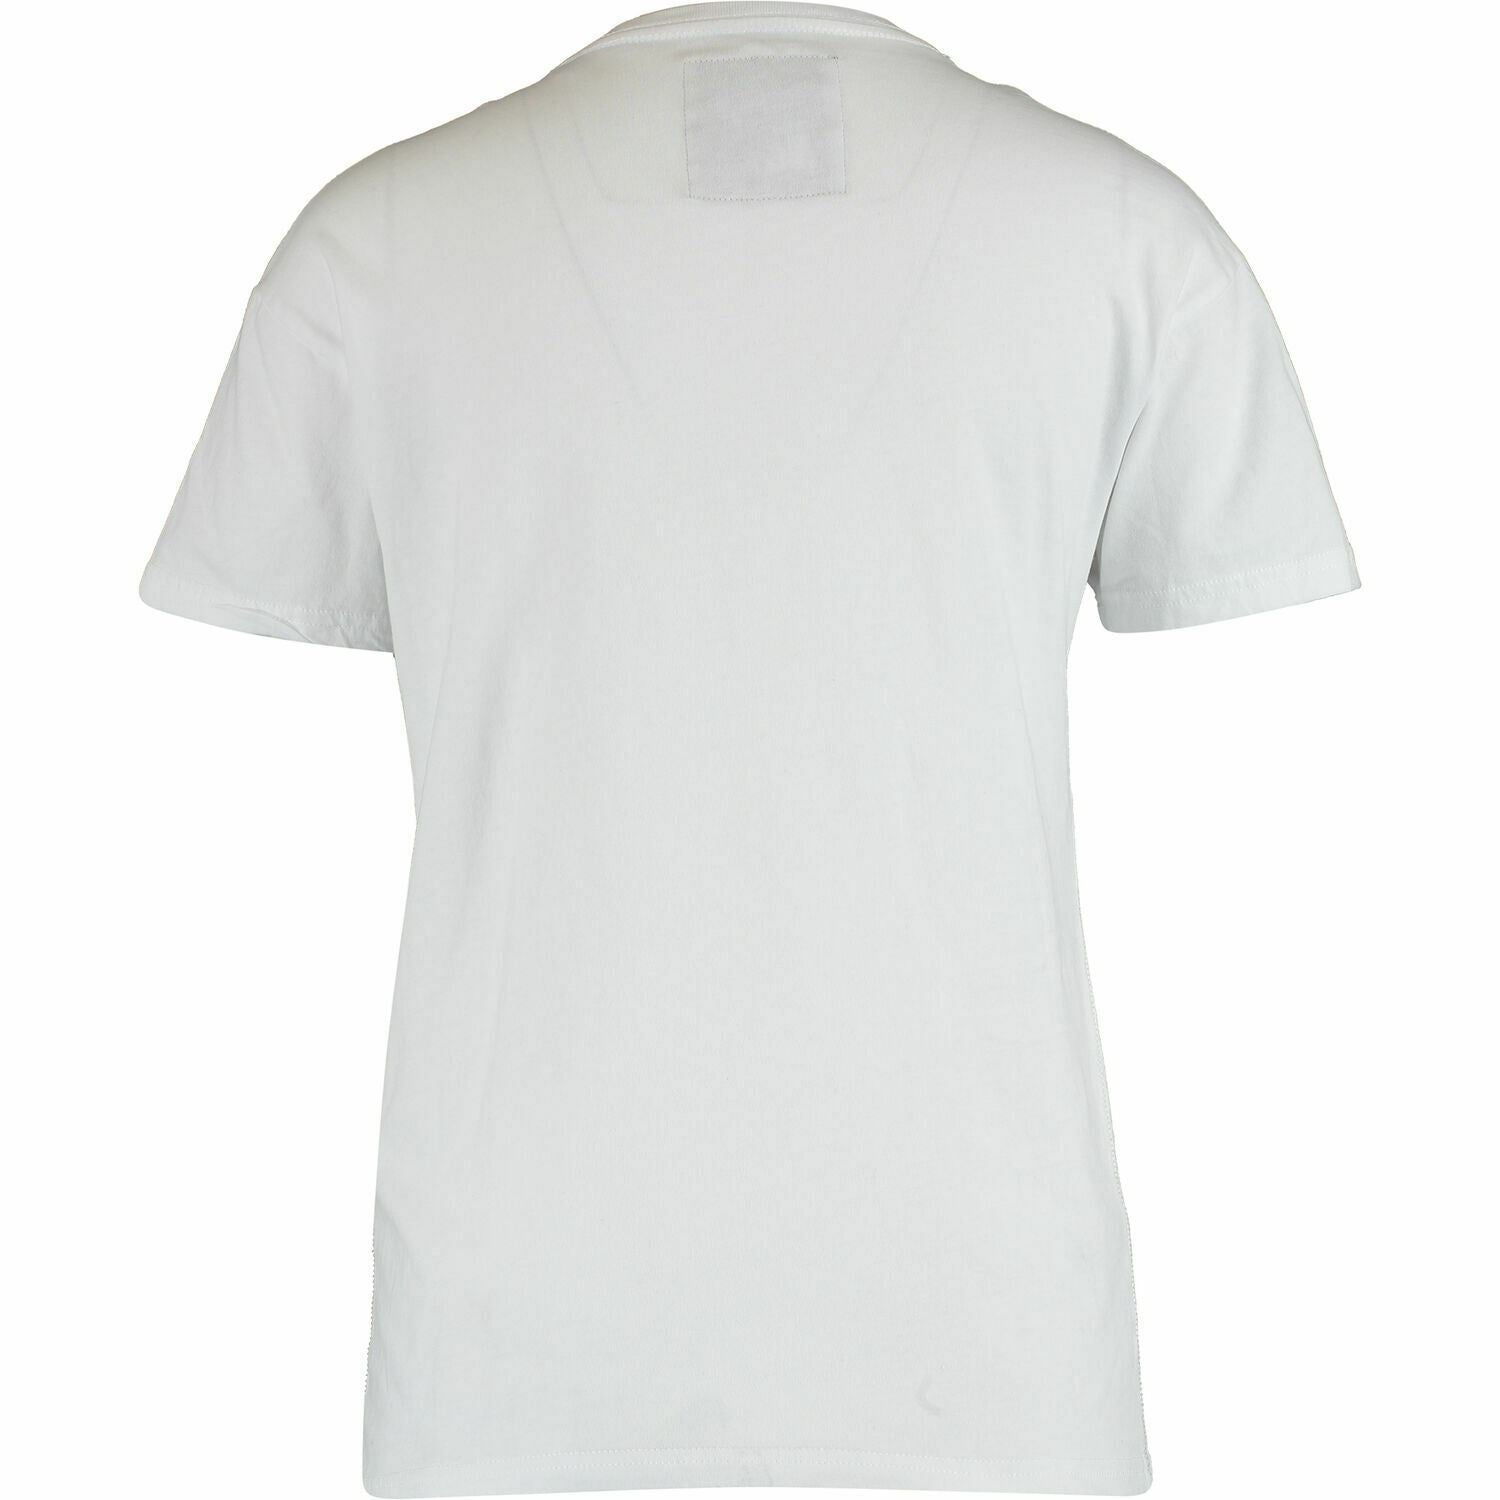 SUPERDRY Women's Short Sleeve Logo T-Shirt, Optic White, size L / UK 14